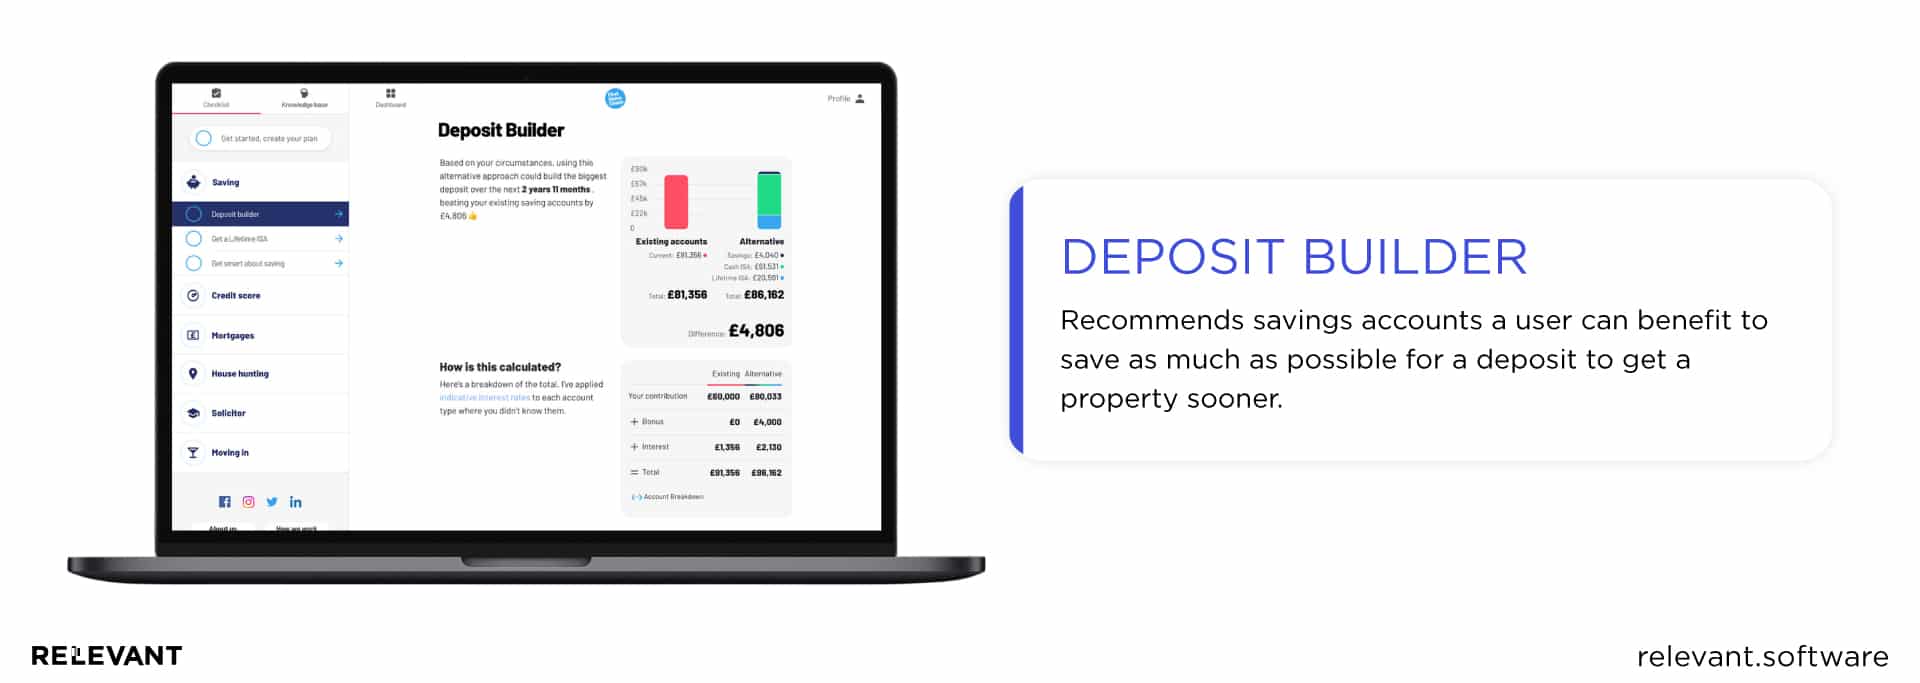 deposit builder in mortgage apps